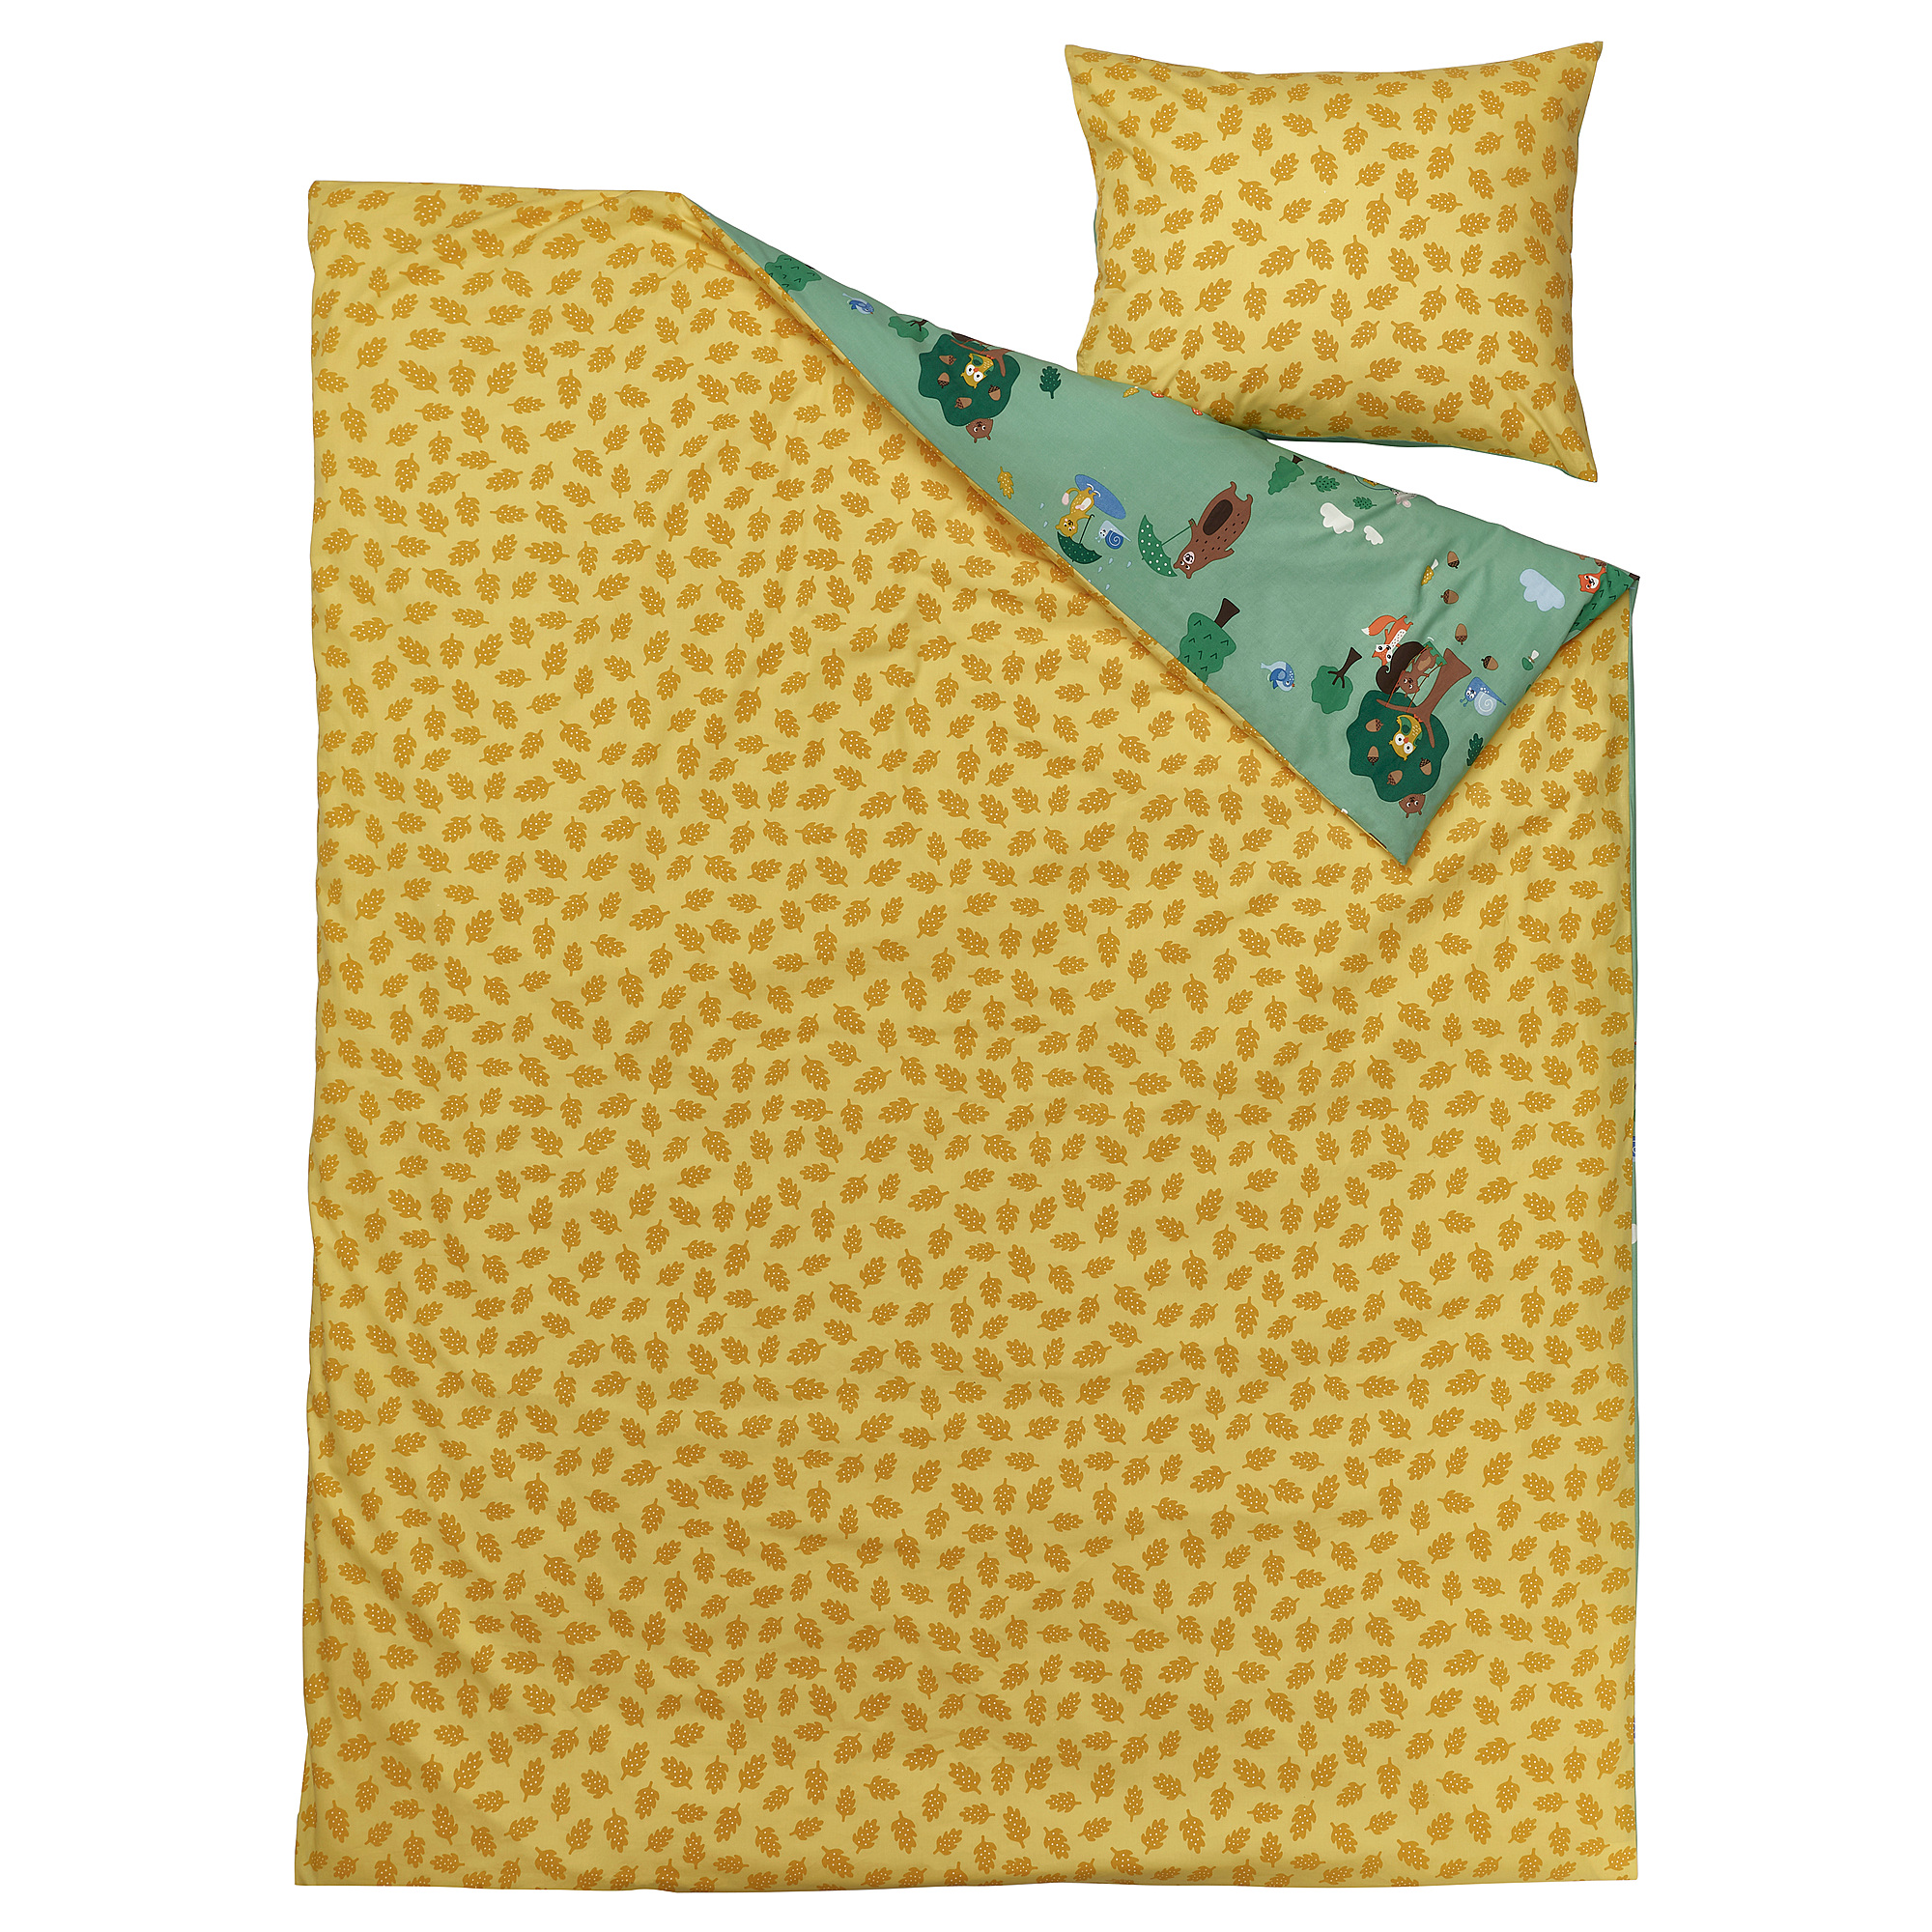 BRUMMIG duvet cover and pillowcase